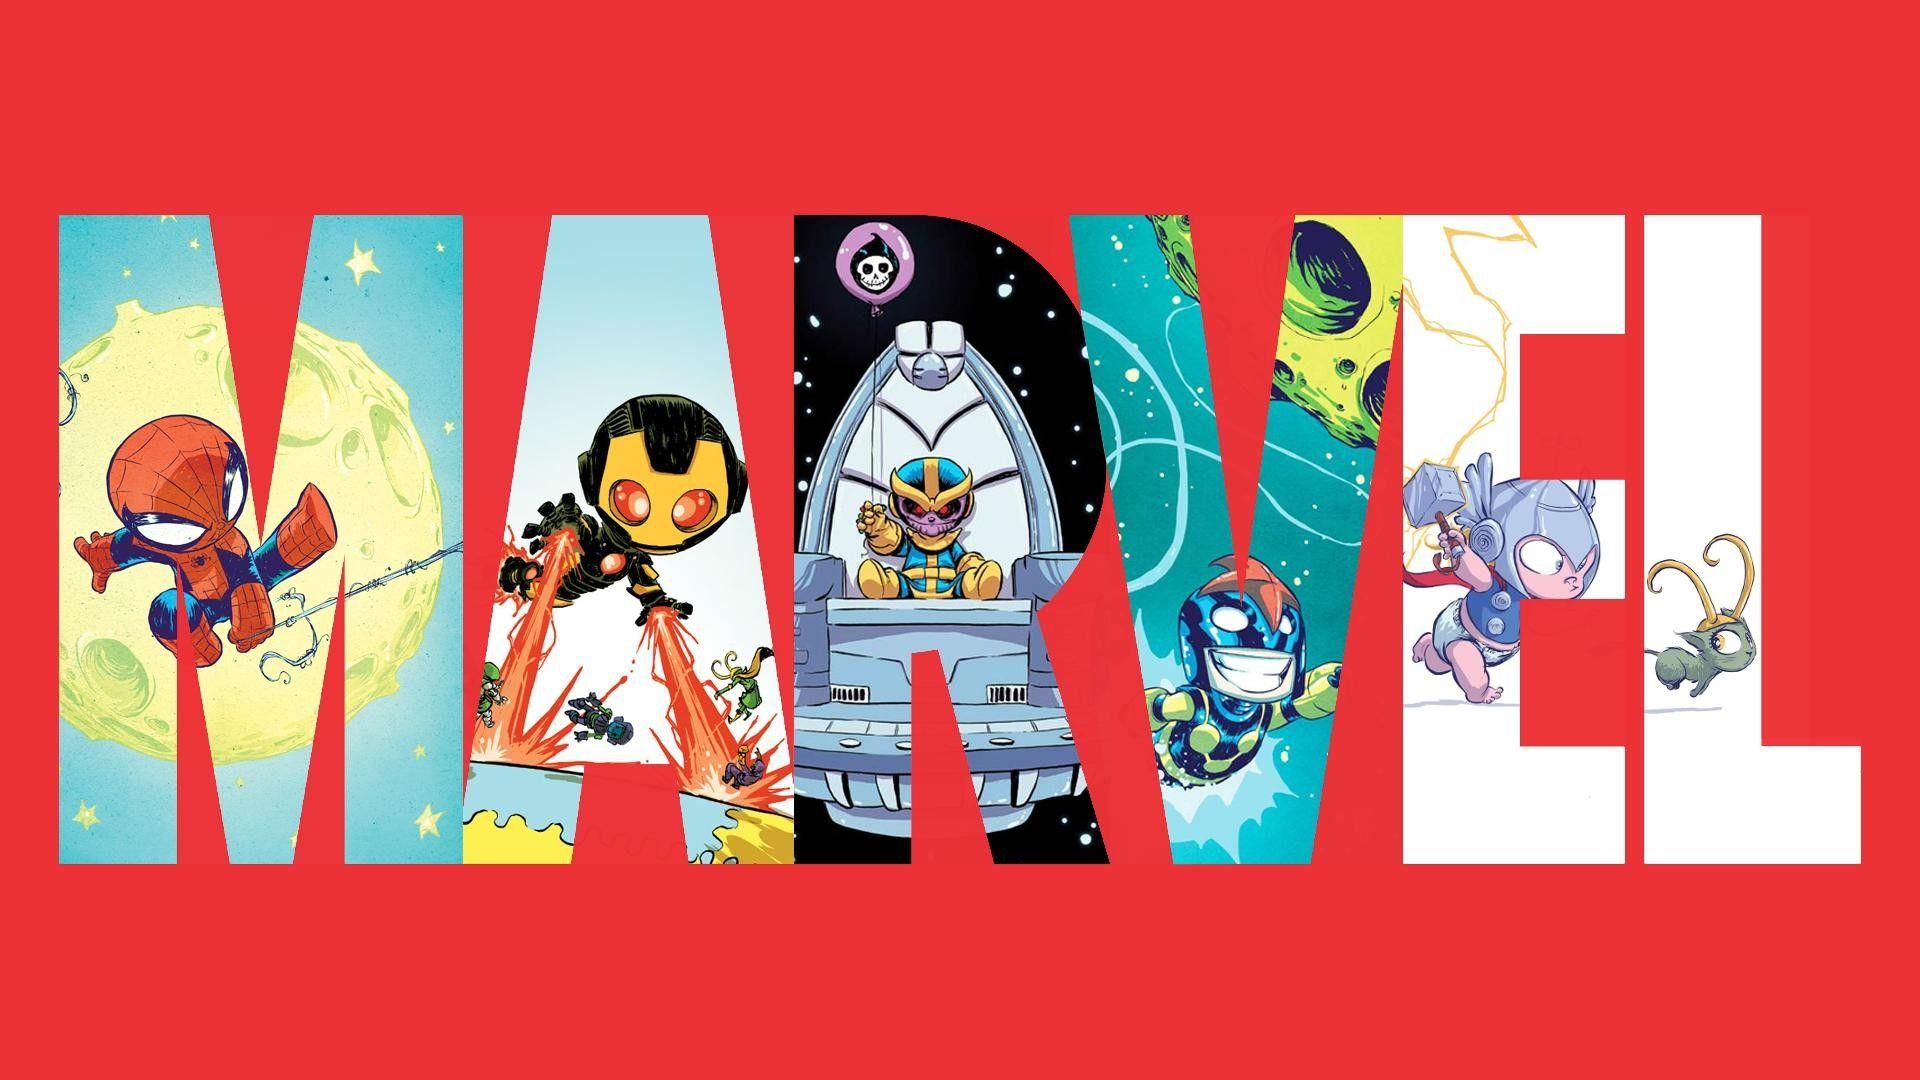 Kawaii Avengers Wallpapers Top Free Kawaii Avengers Backgrounds Wallpaperaccess